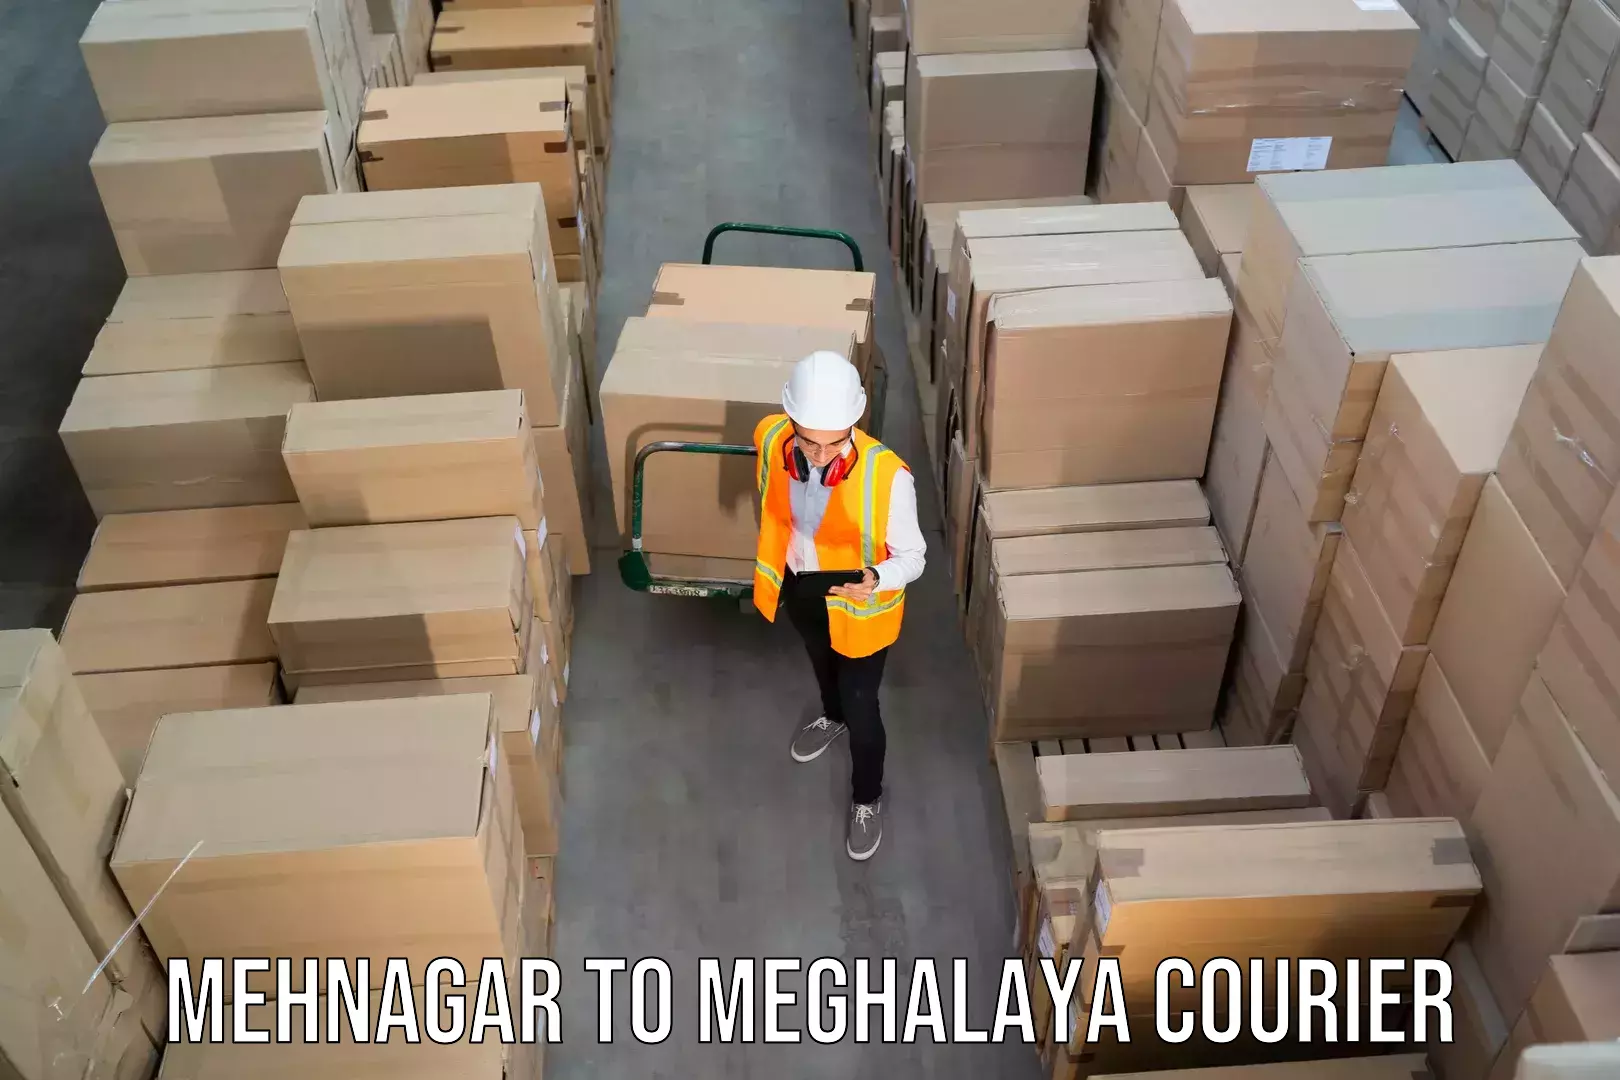 24/7 courier service Mehnagar to Meghalaya